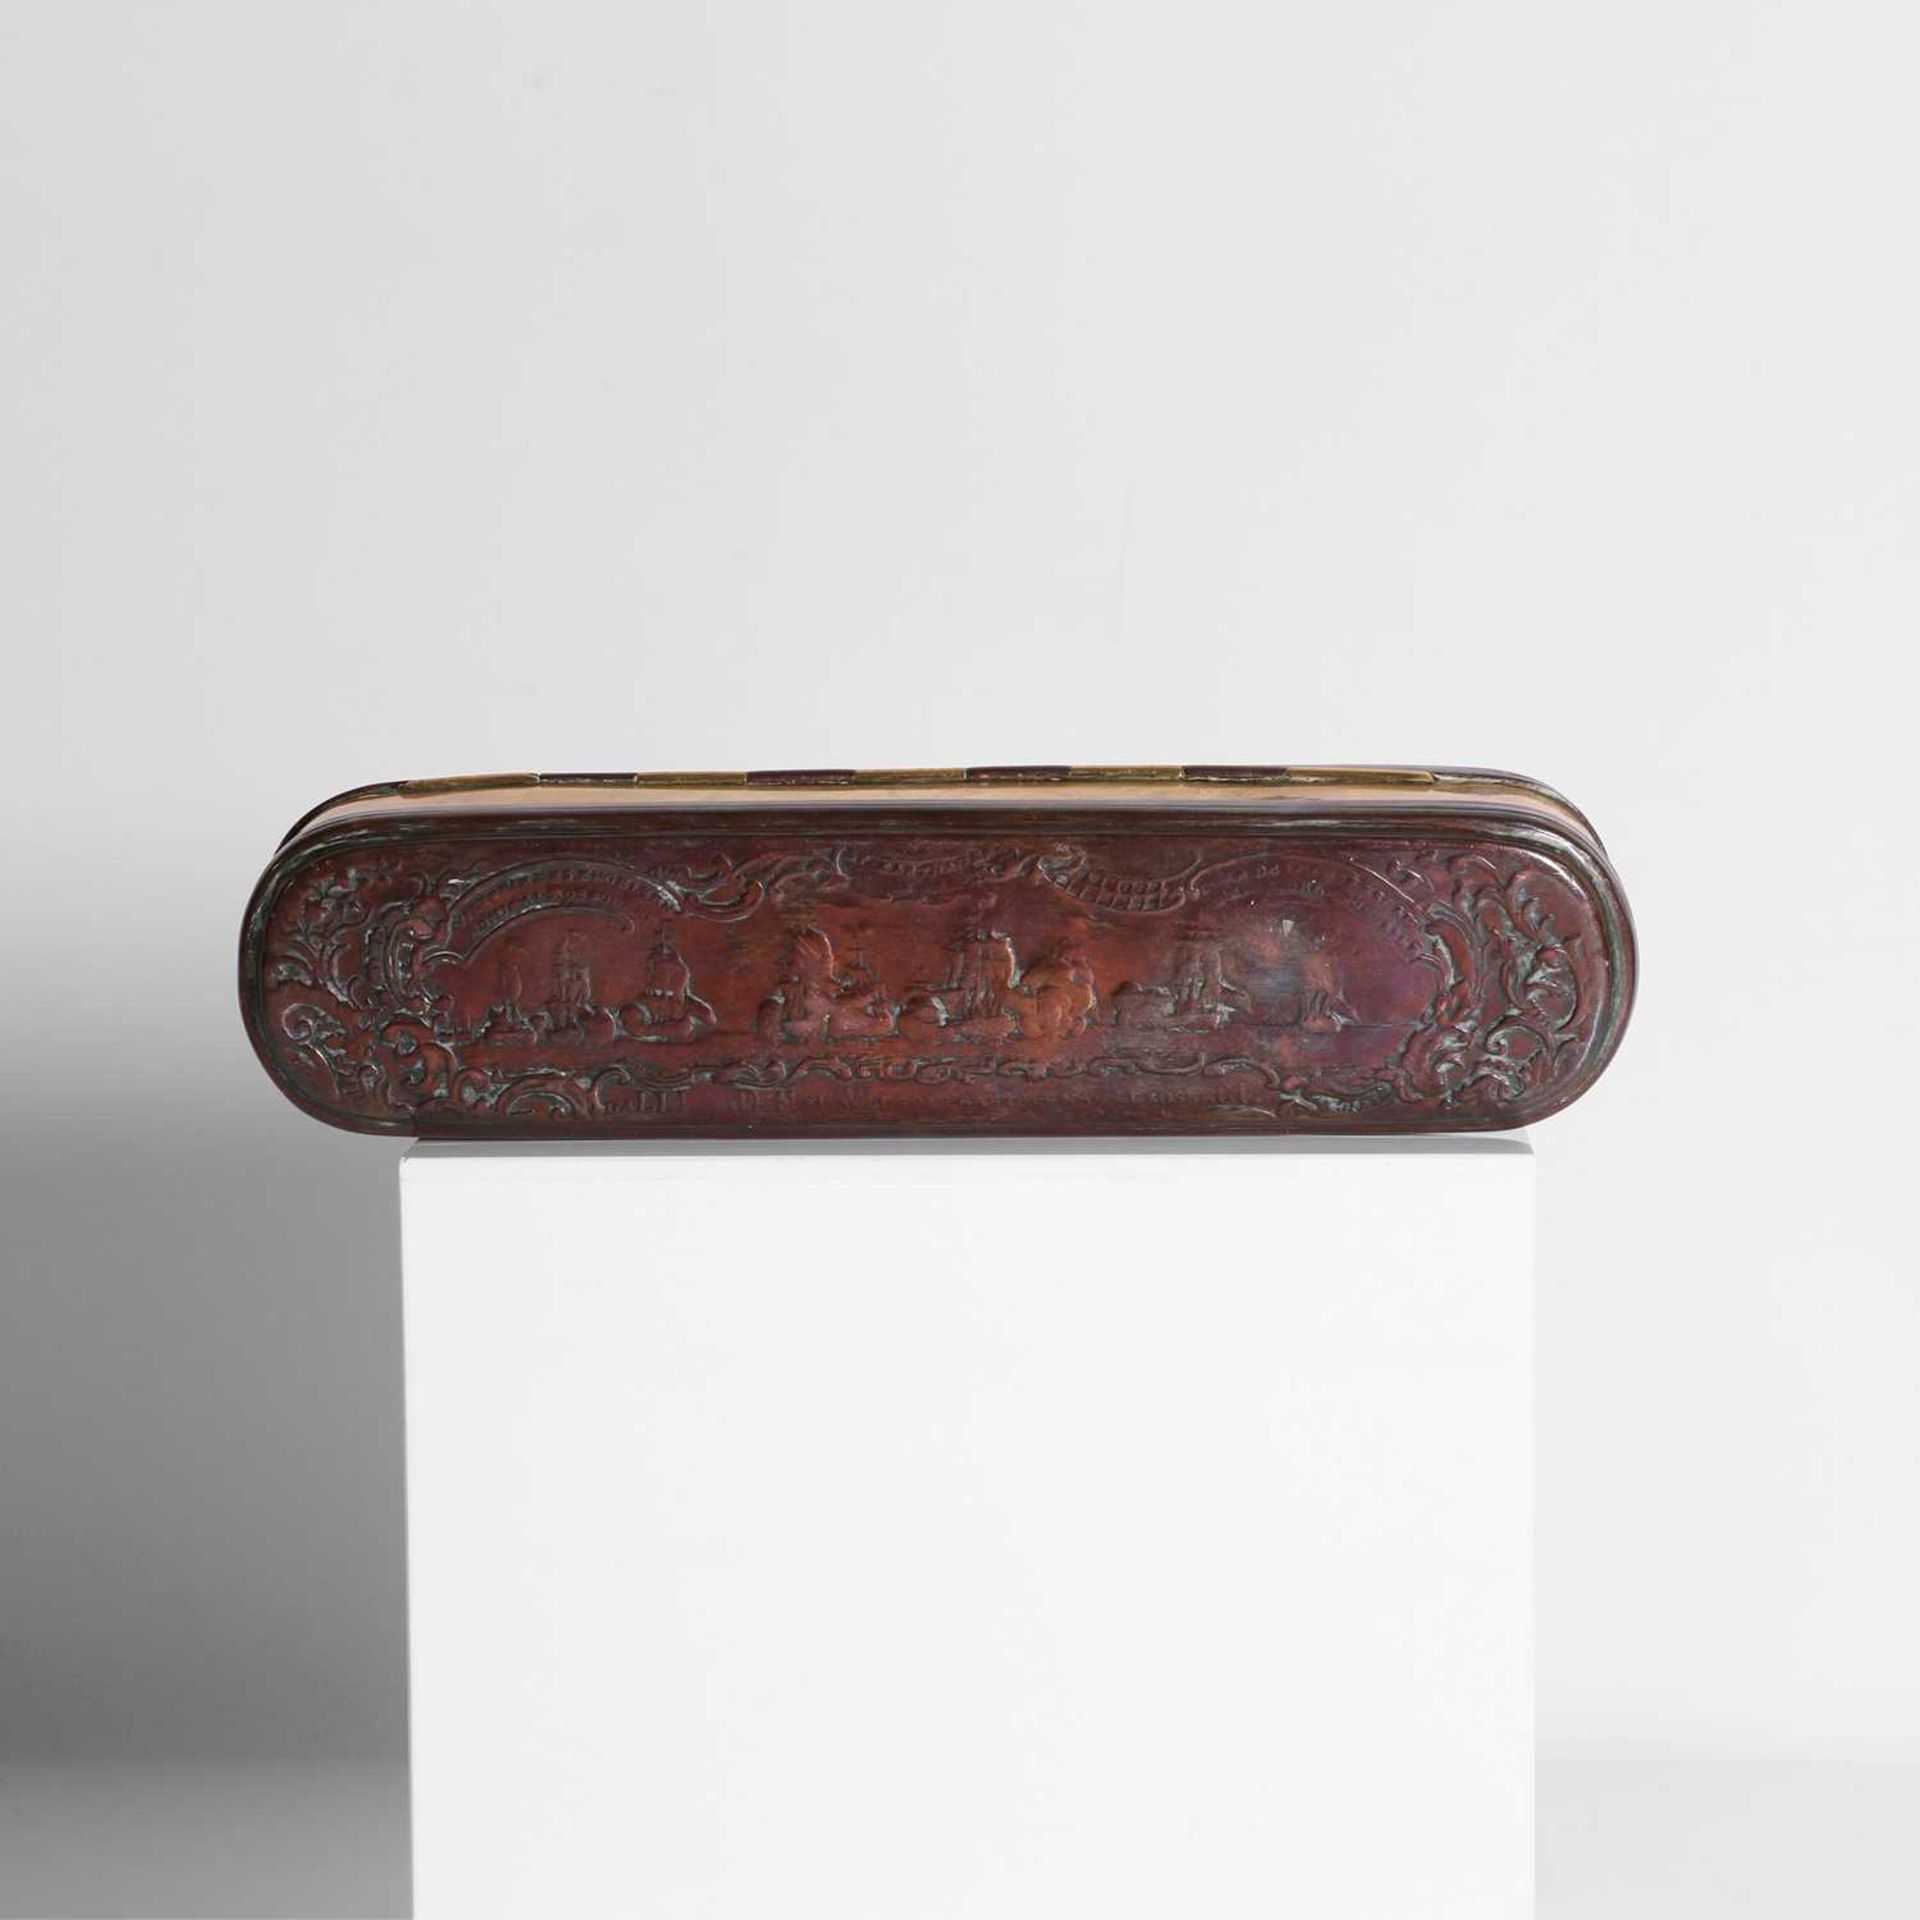 A copper and brass tobacco box, - Image 3 of 6